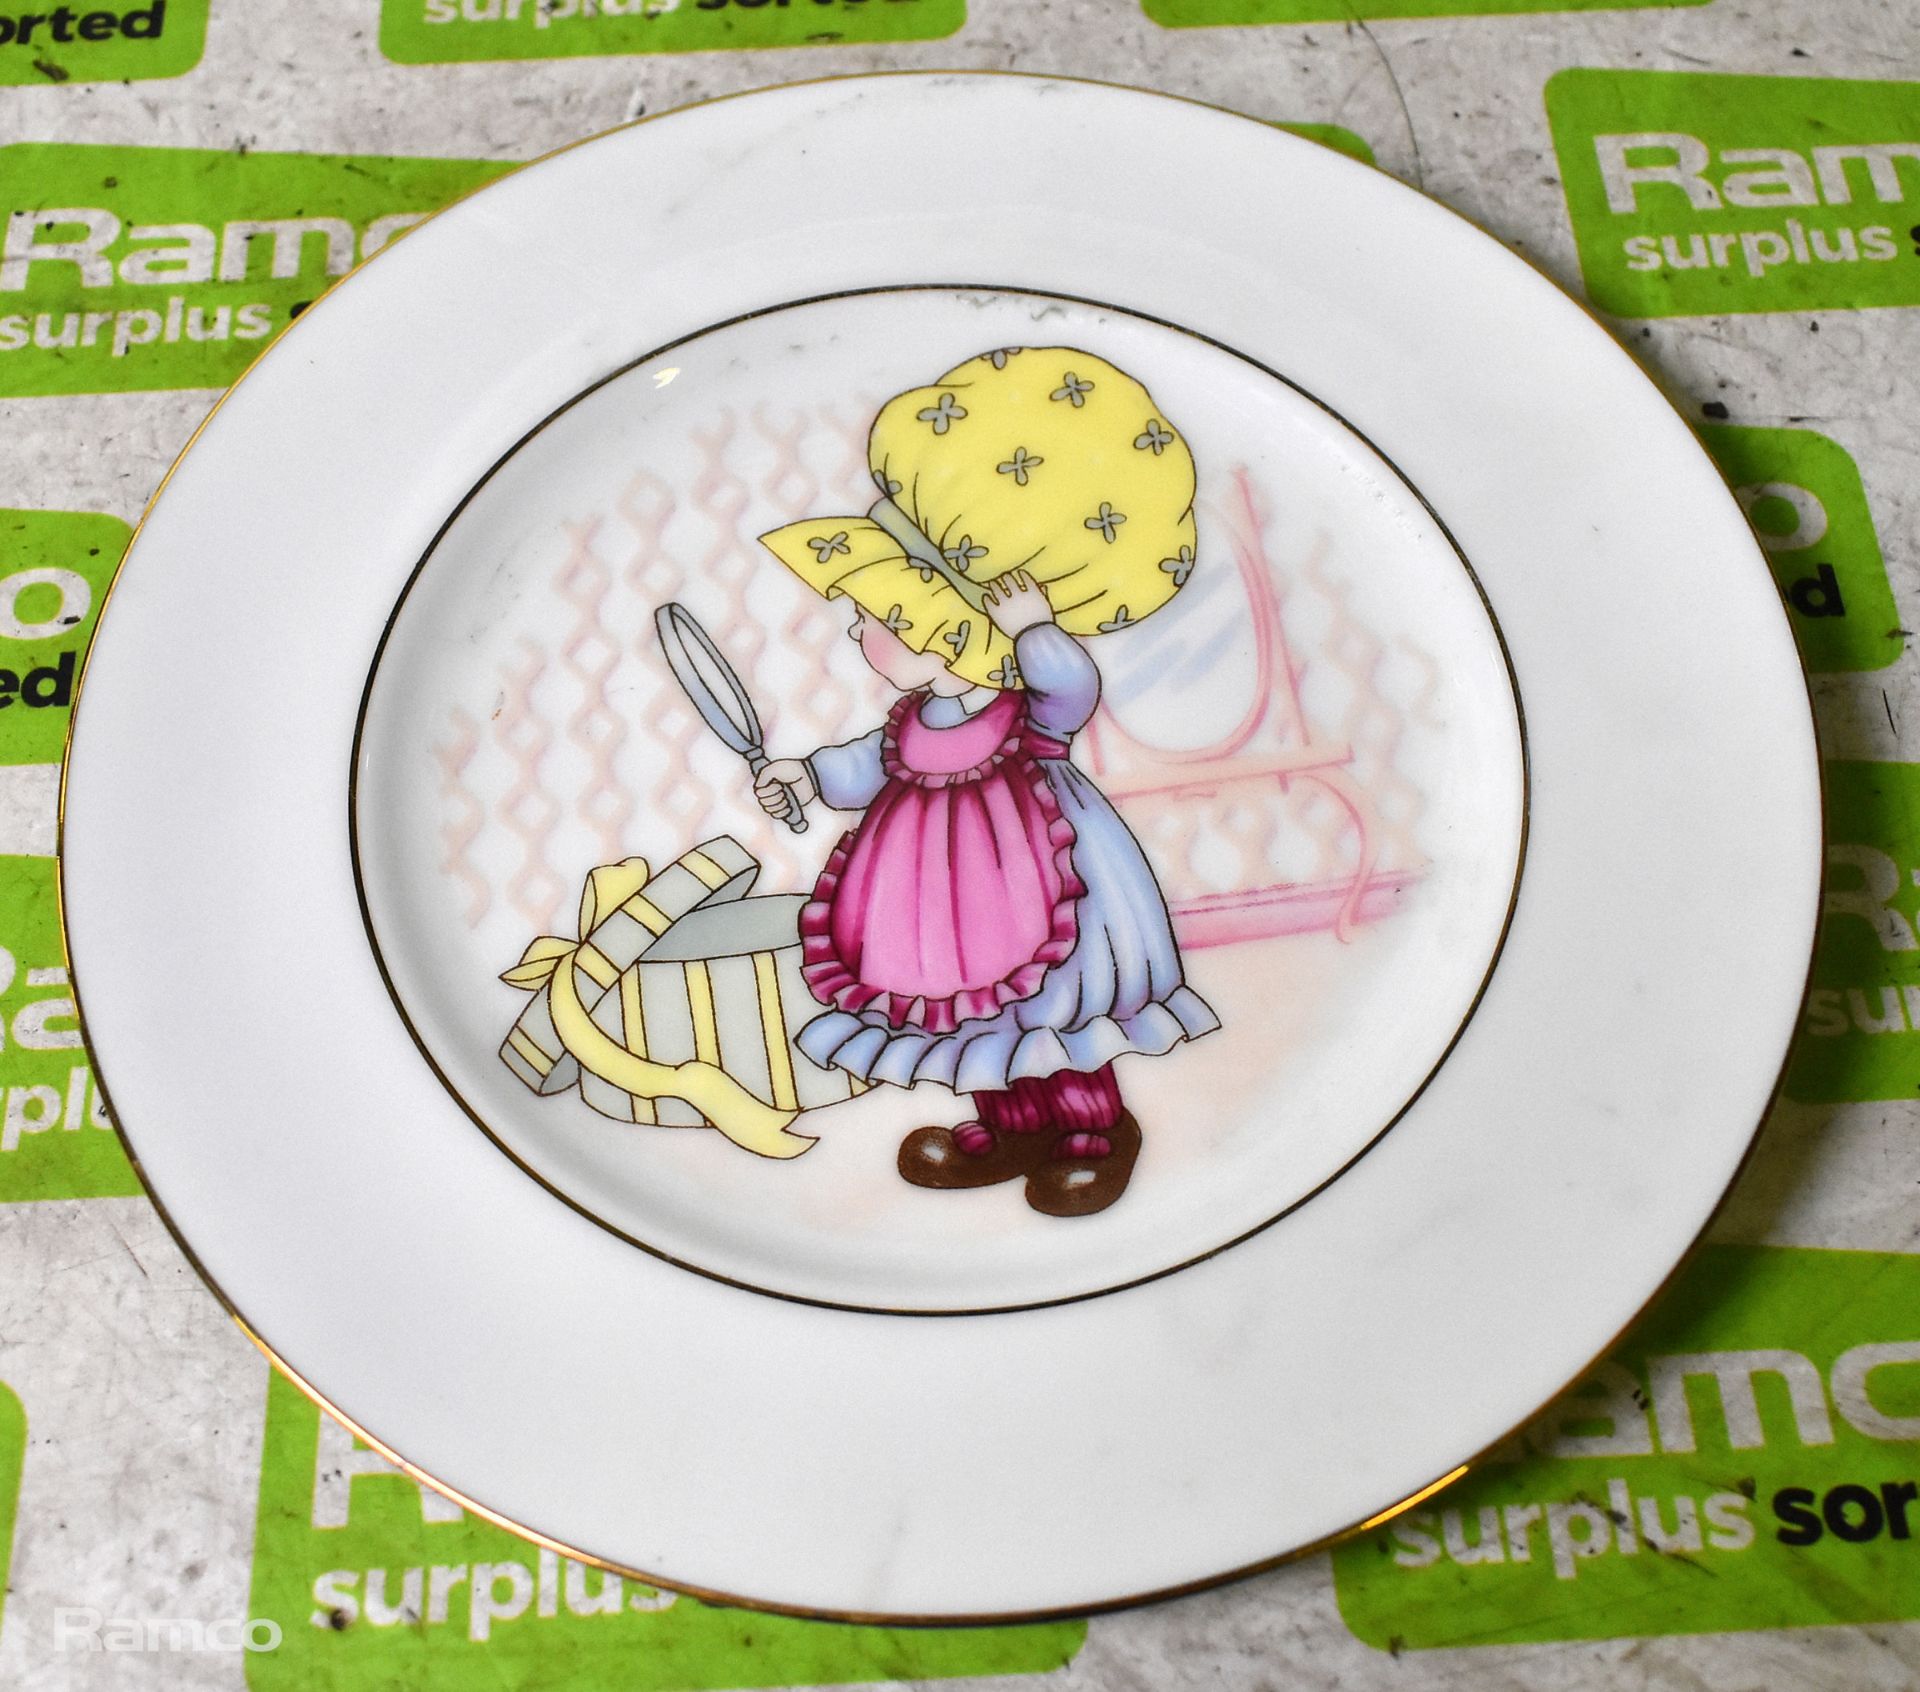 6x Royal Burlington - Girl with the mop cap - bone china plates - Image 5 of 8